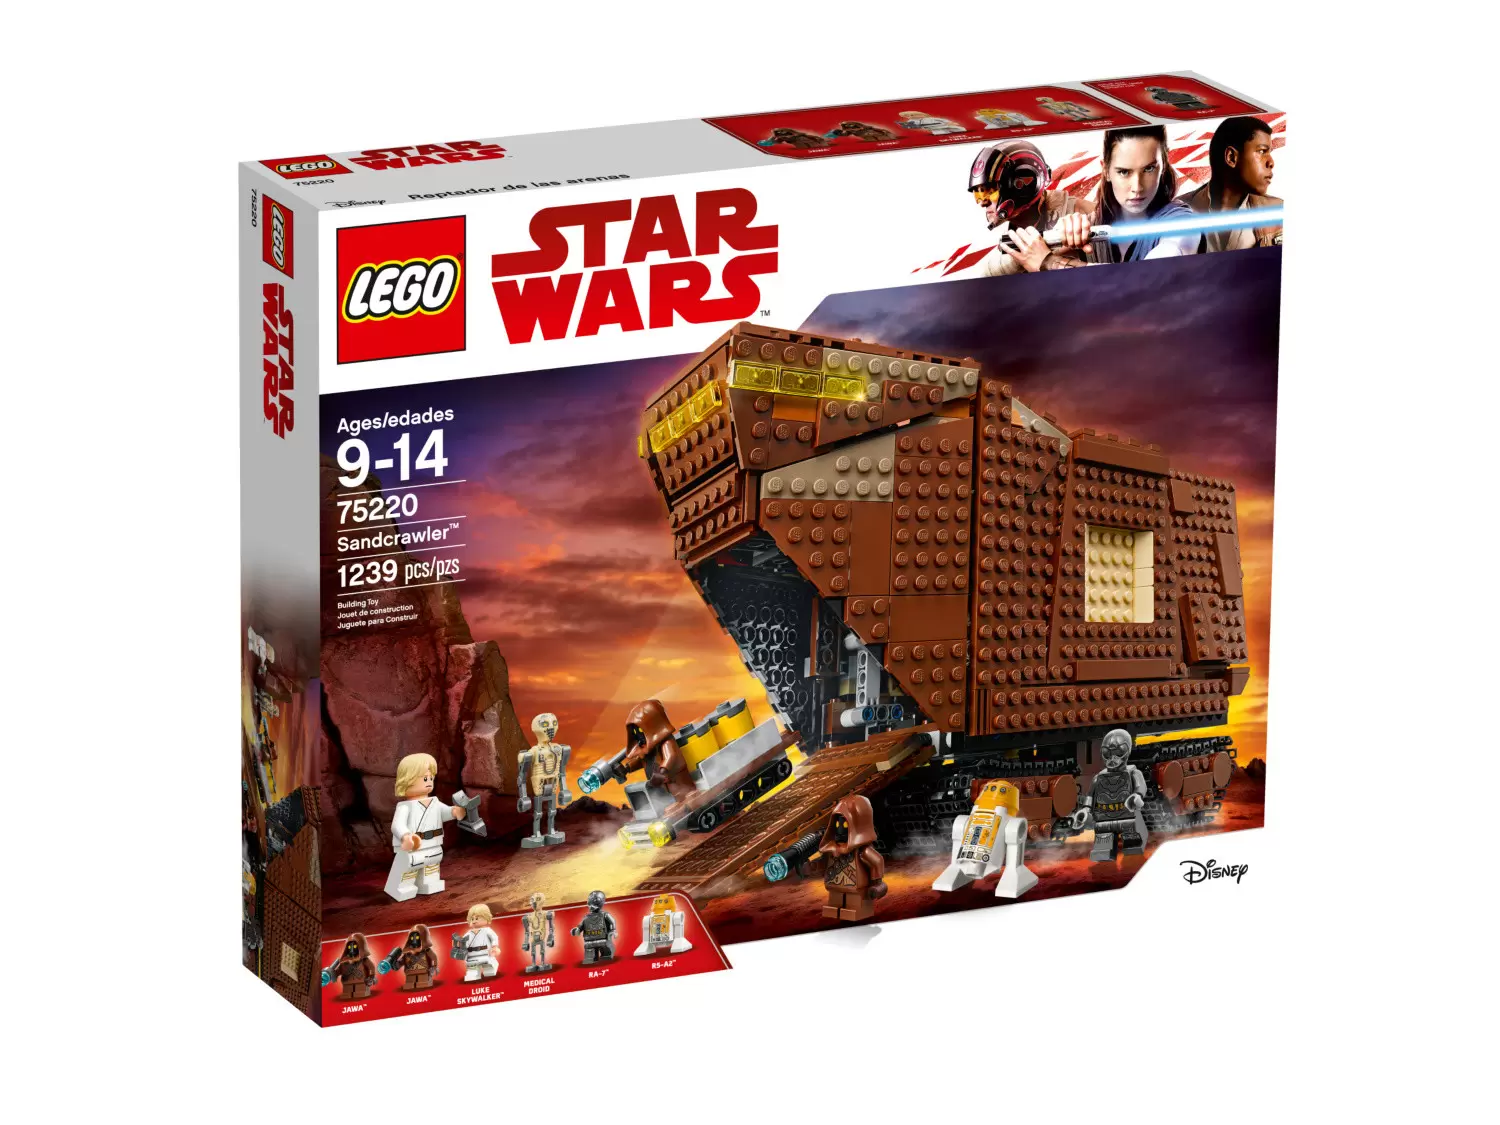 Sandcrawler LEGO Star Wars set 75220